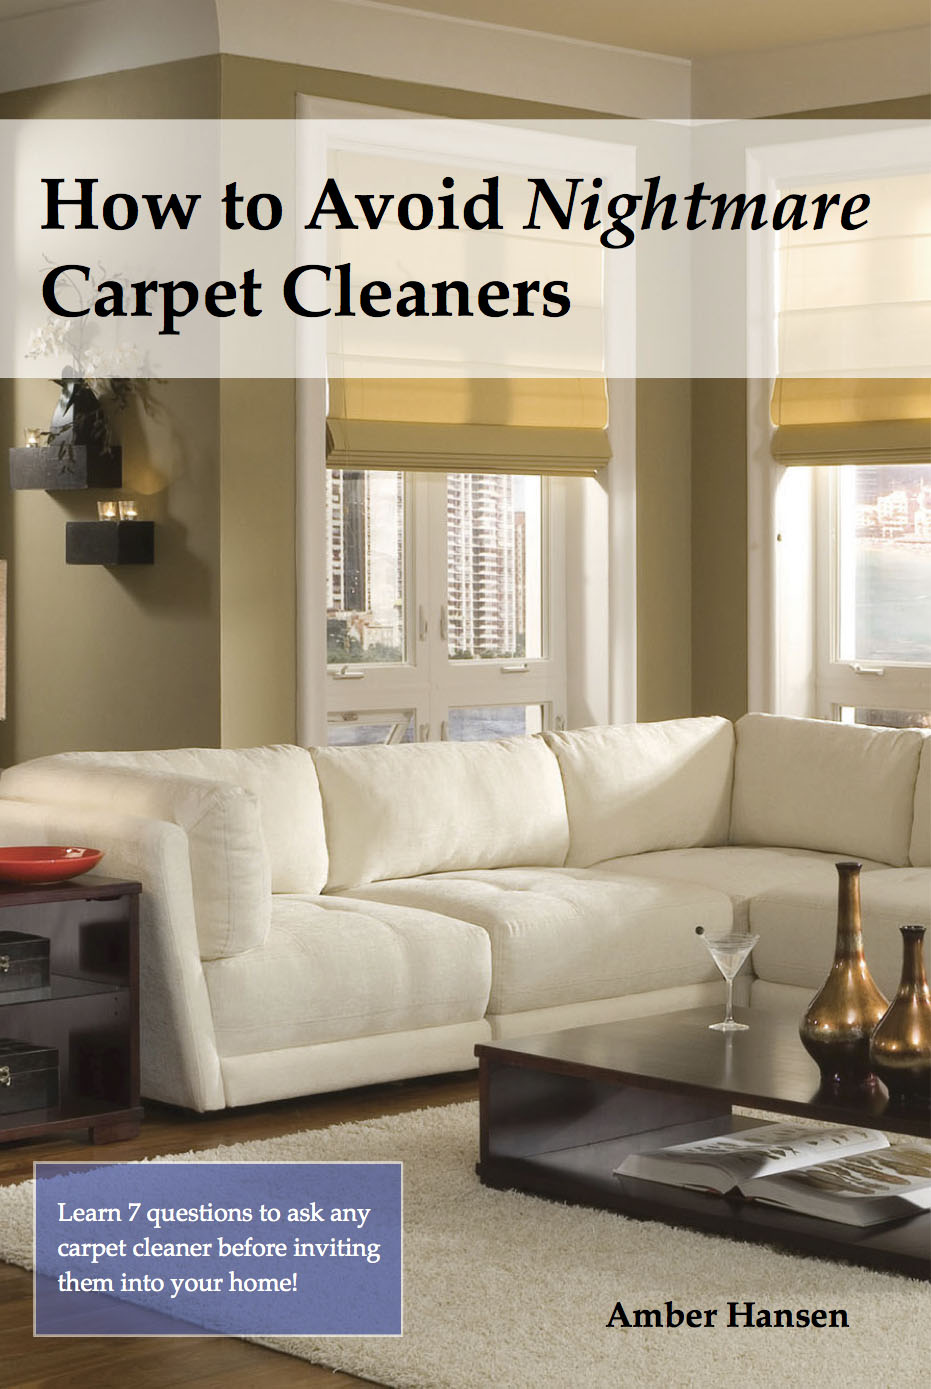 Hansen Steamway Carpet Tile & Upholstery Cleaning